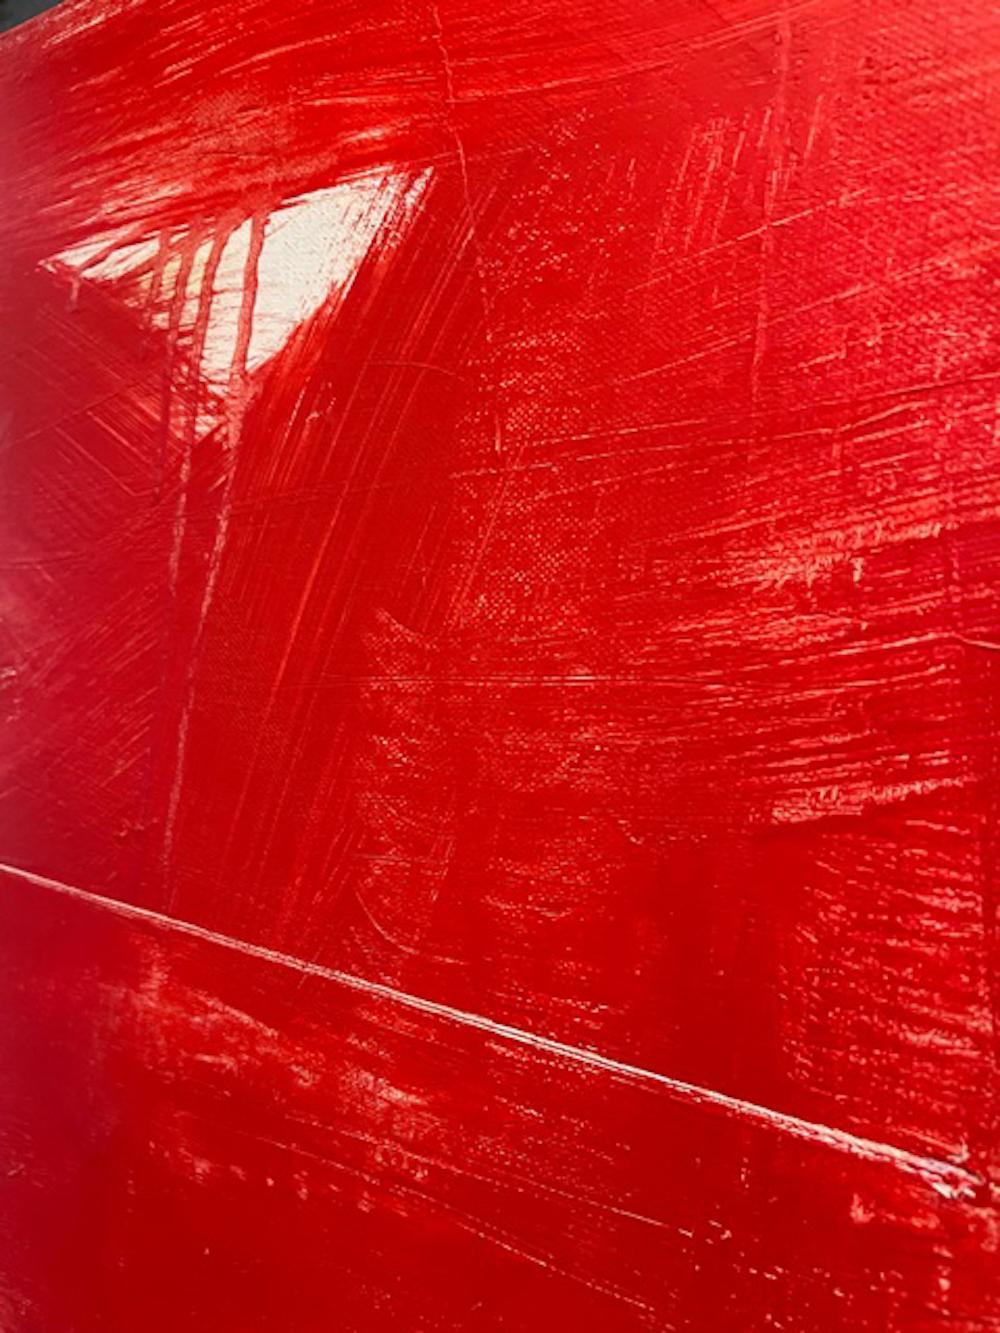 Lloyd Martin, Large Red Stilt, Oil on Canvas, 2010 2